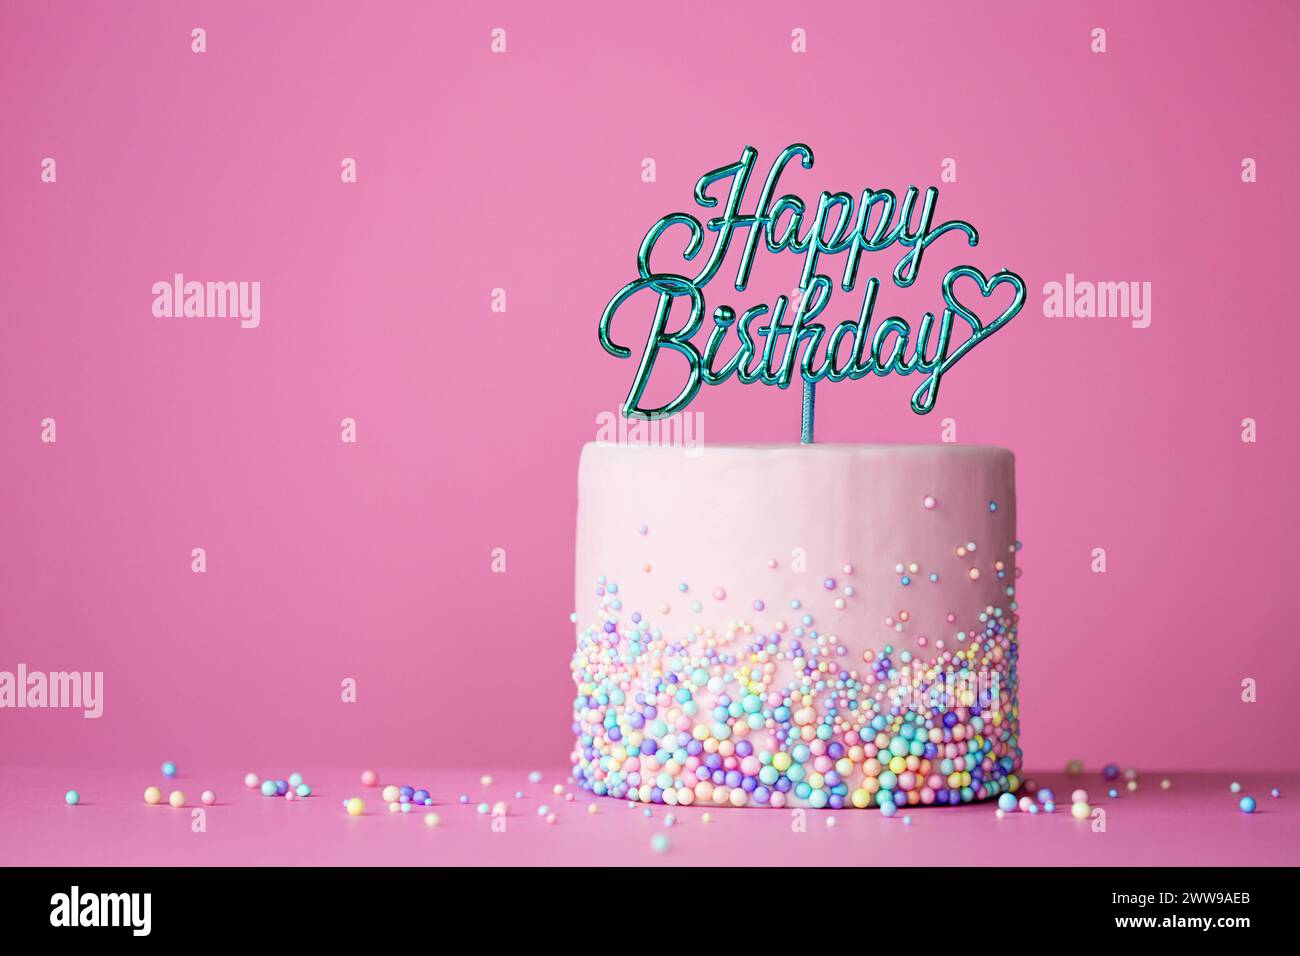 Celebration birthday cake with happy birthday cake pick against a pink background Stock Photo